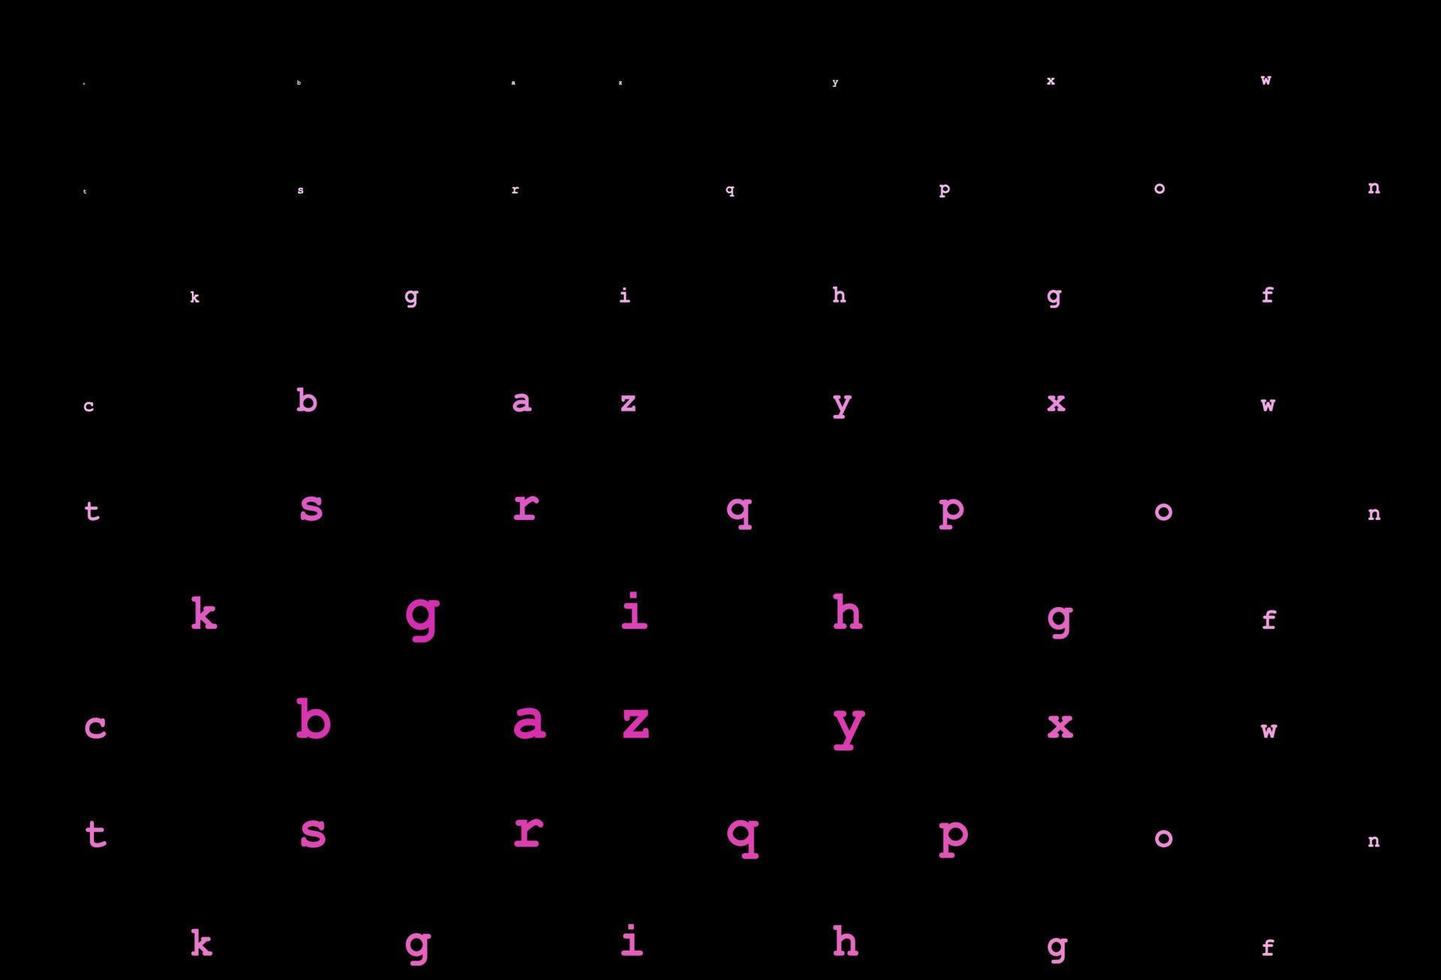 layout de vetor rosa escuro com alfabeto latino.